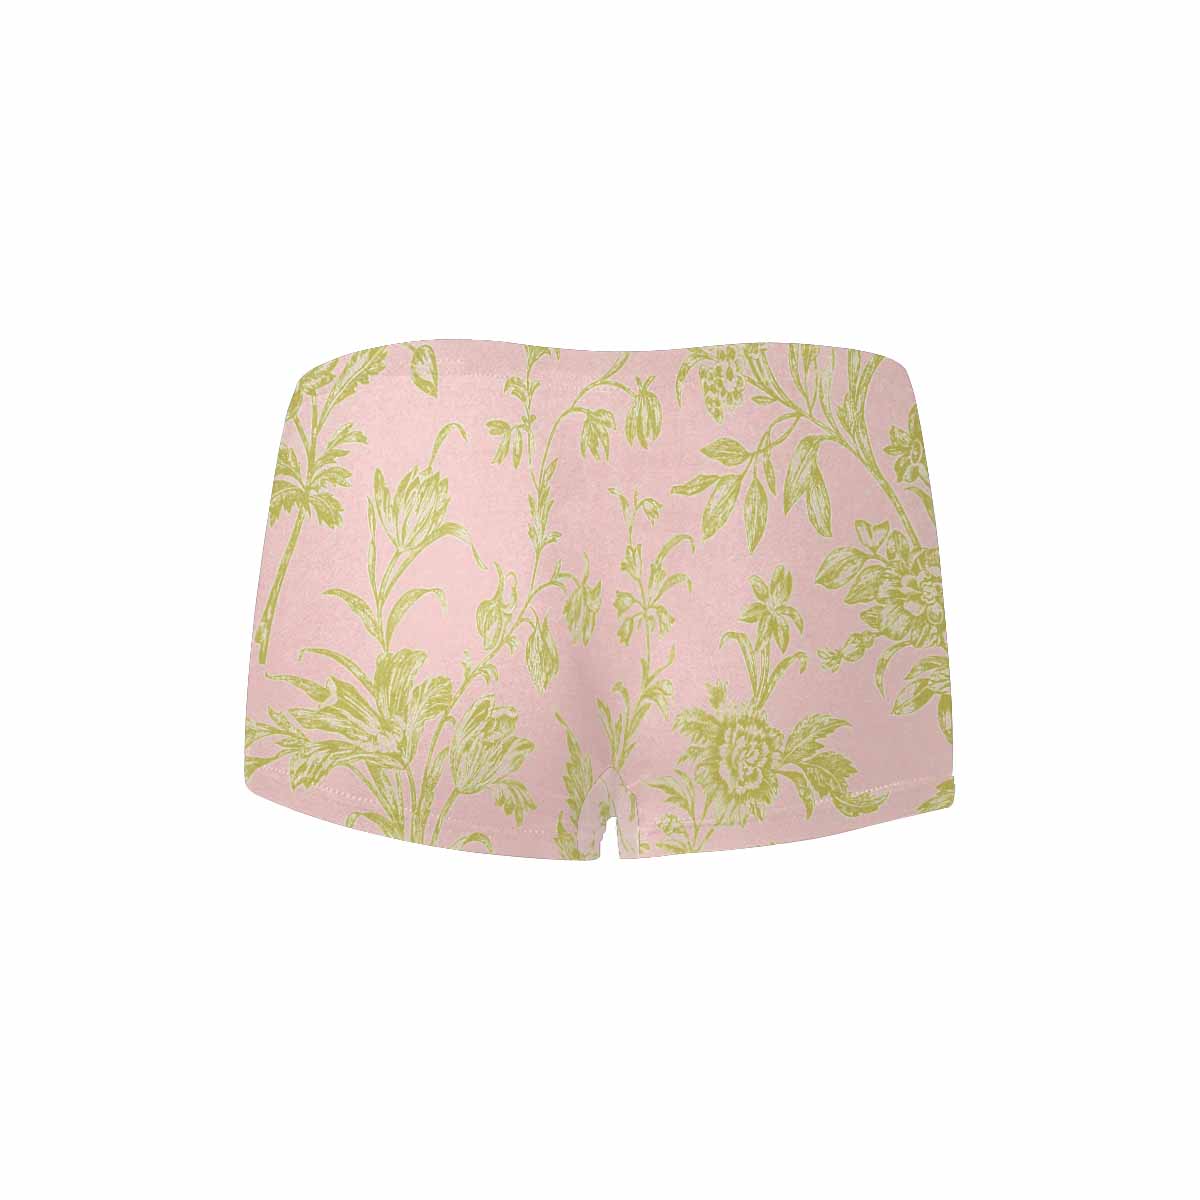 Floral 2, boyshorts, daisy dukes, pum pum shorts, panties, design 21